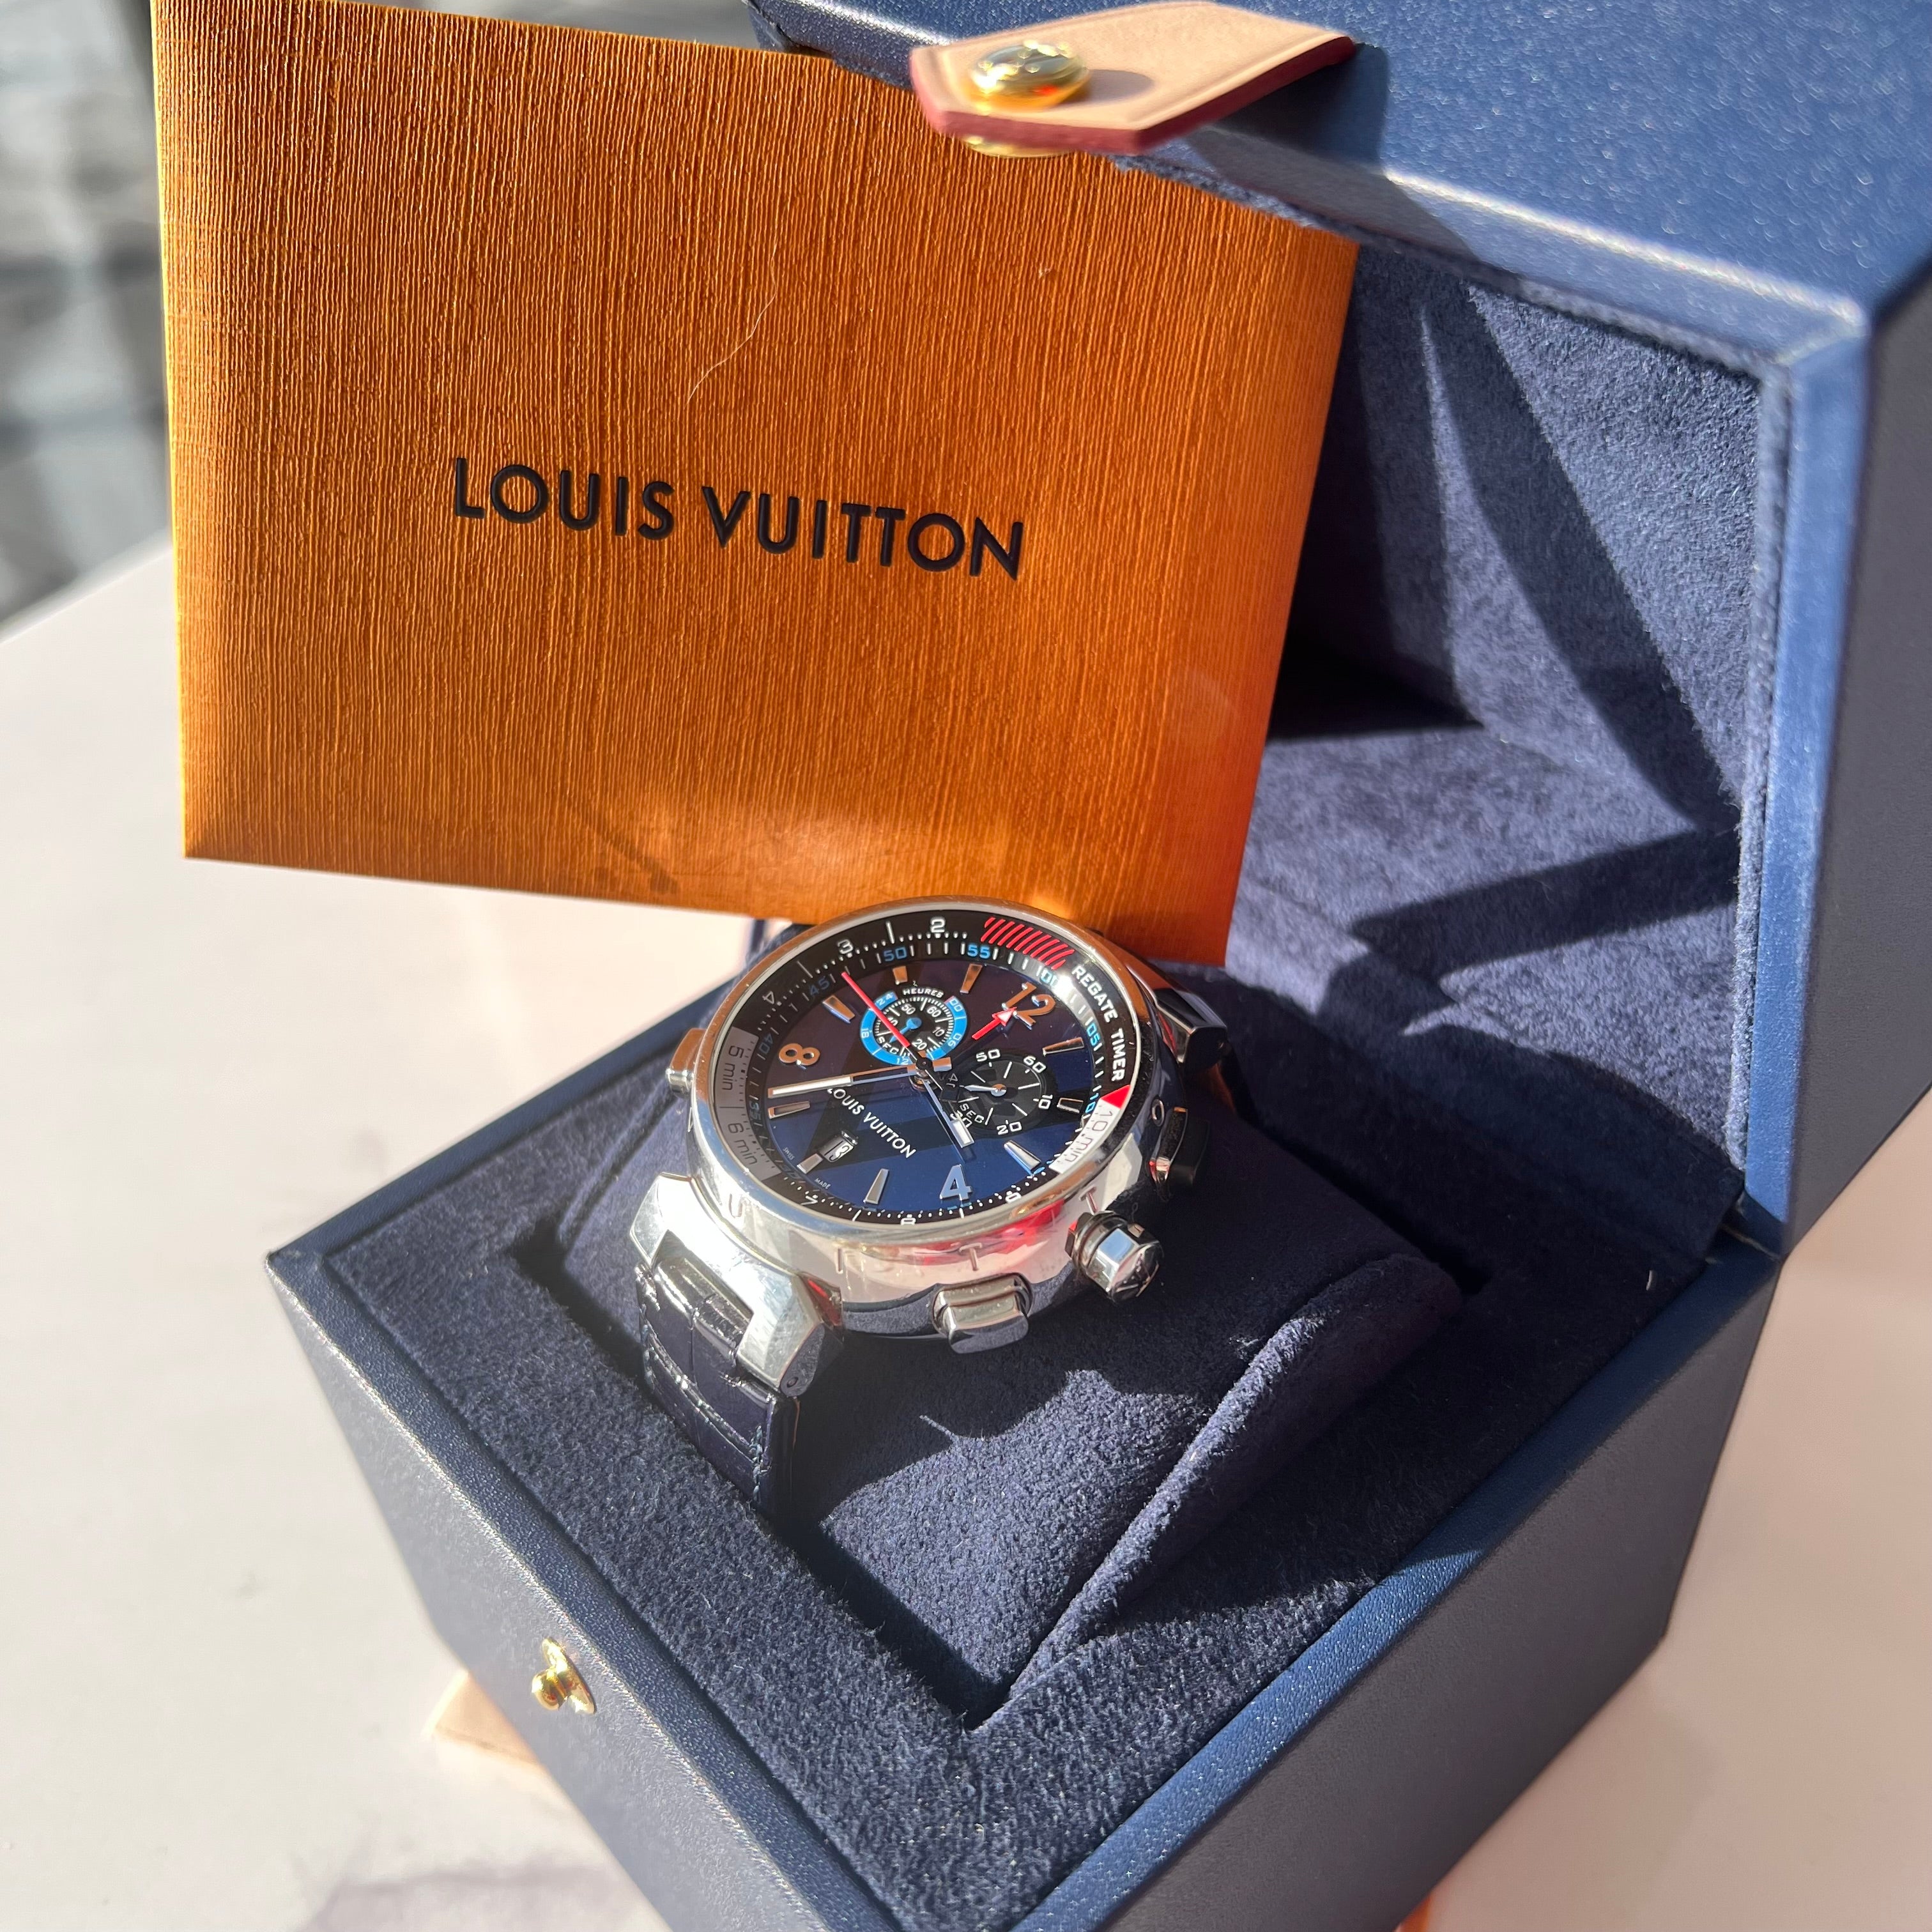 Watch Louis Vuitton Tambour Régate Navy